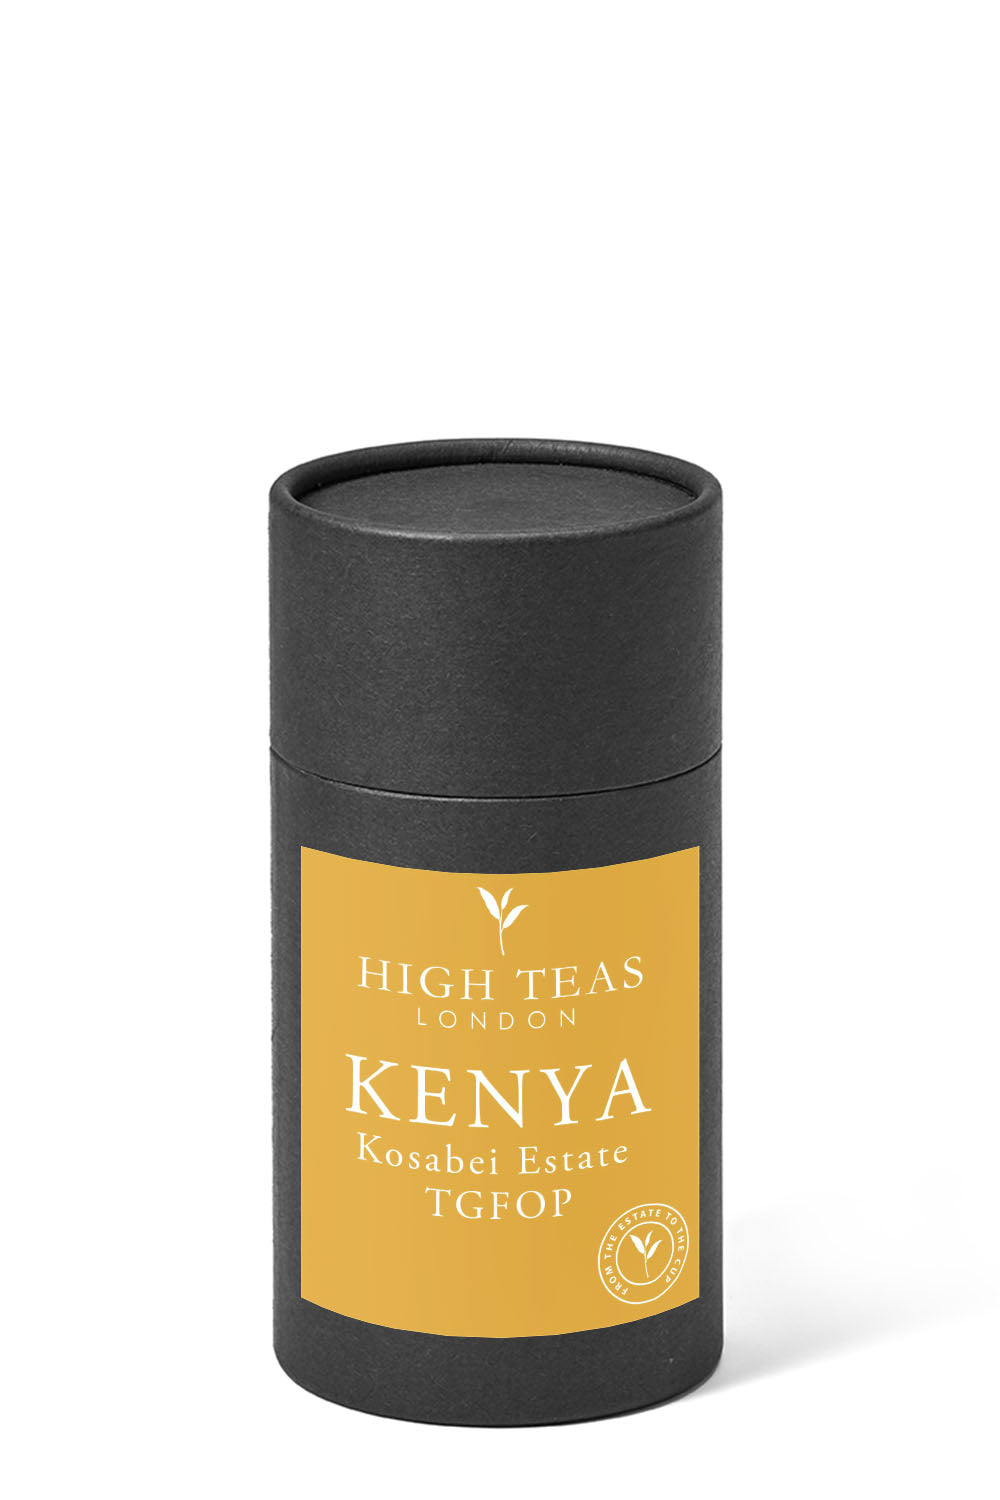 Kenya - Kosabei Estate TGFOP (TM)-60g gift-Loose Leaf Tea-High Teas